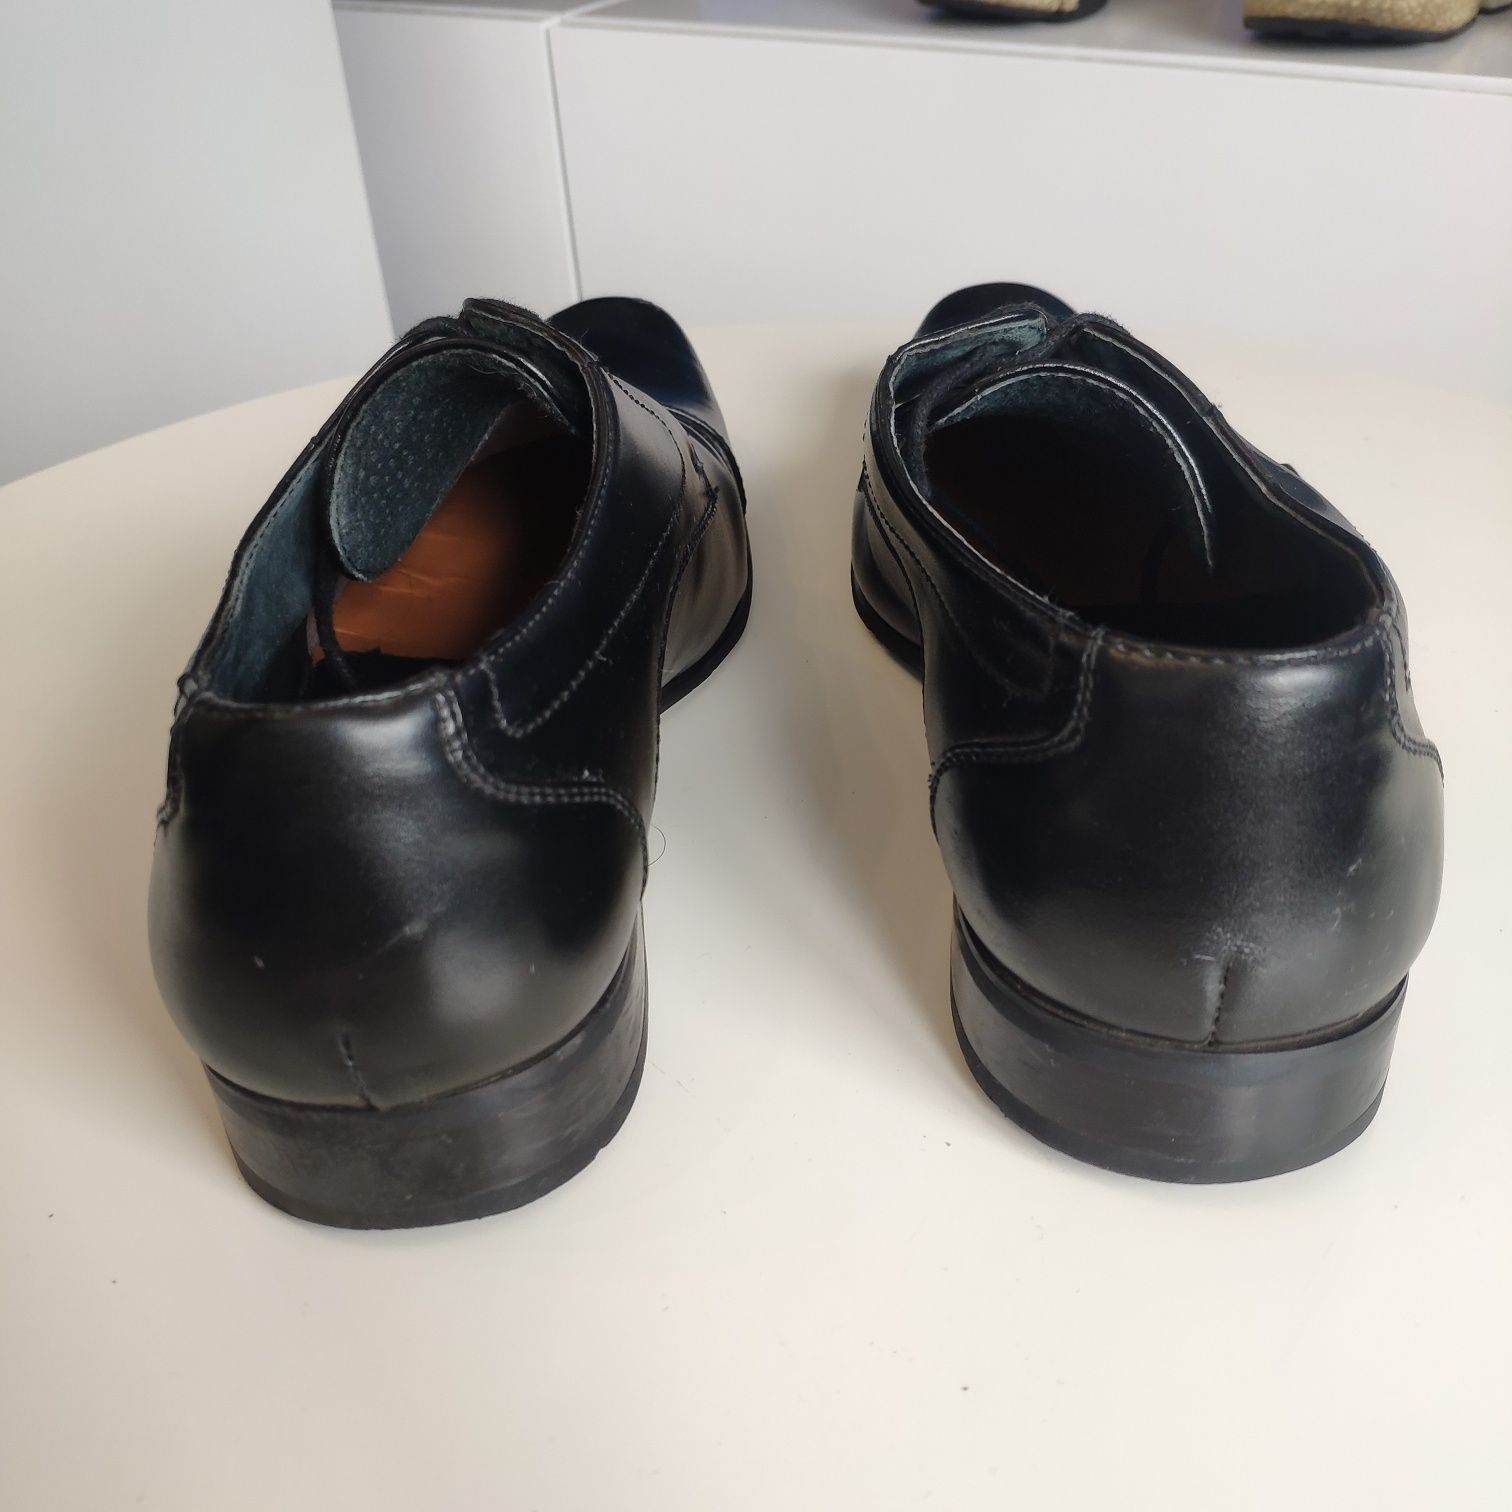 Pantofle/buty do garnituru 42